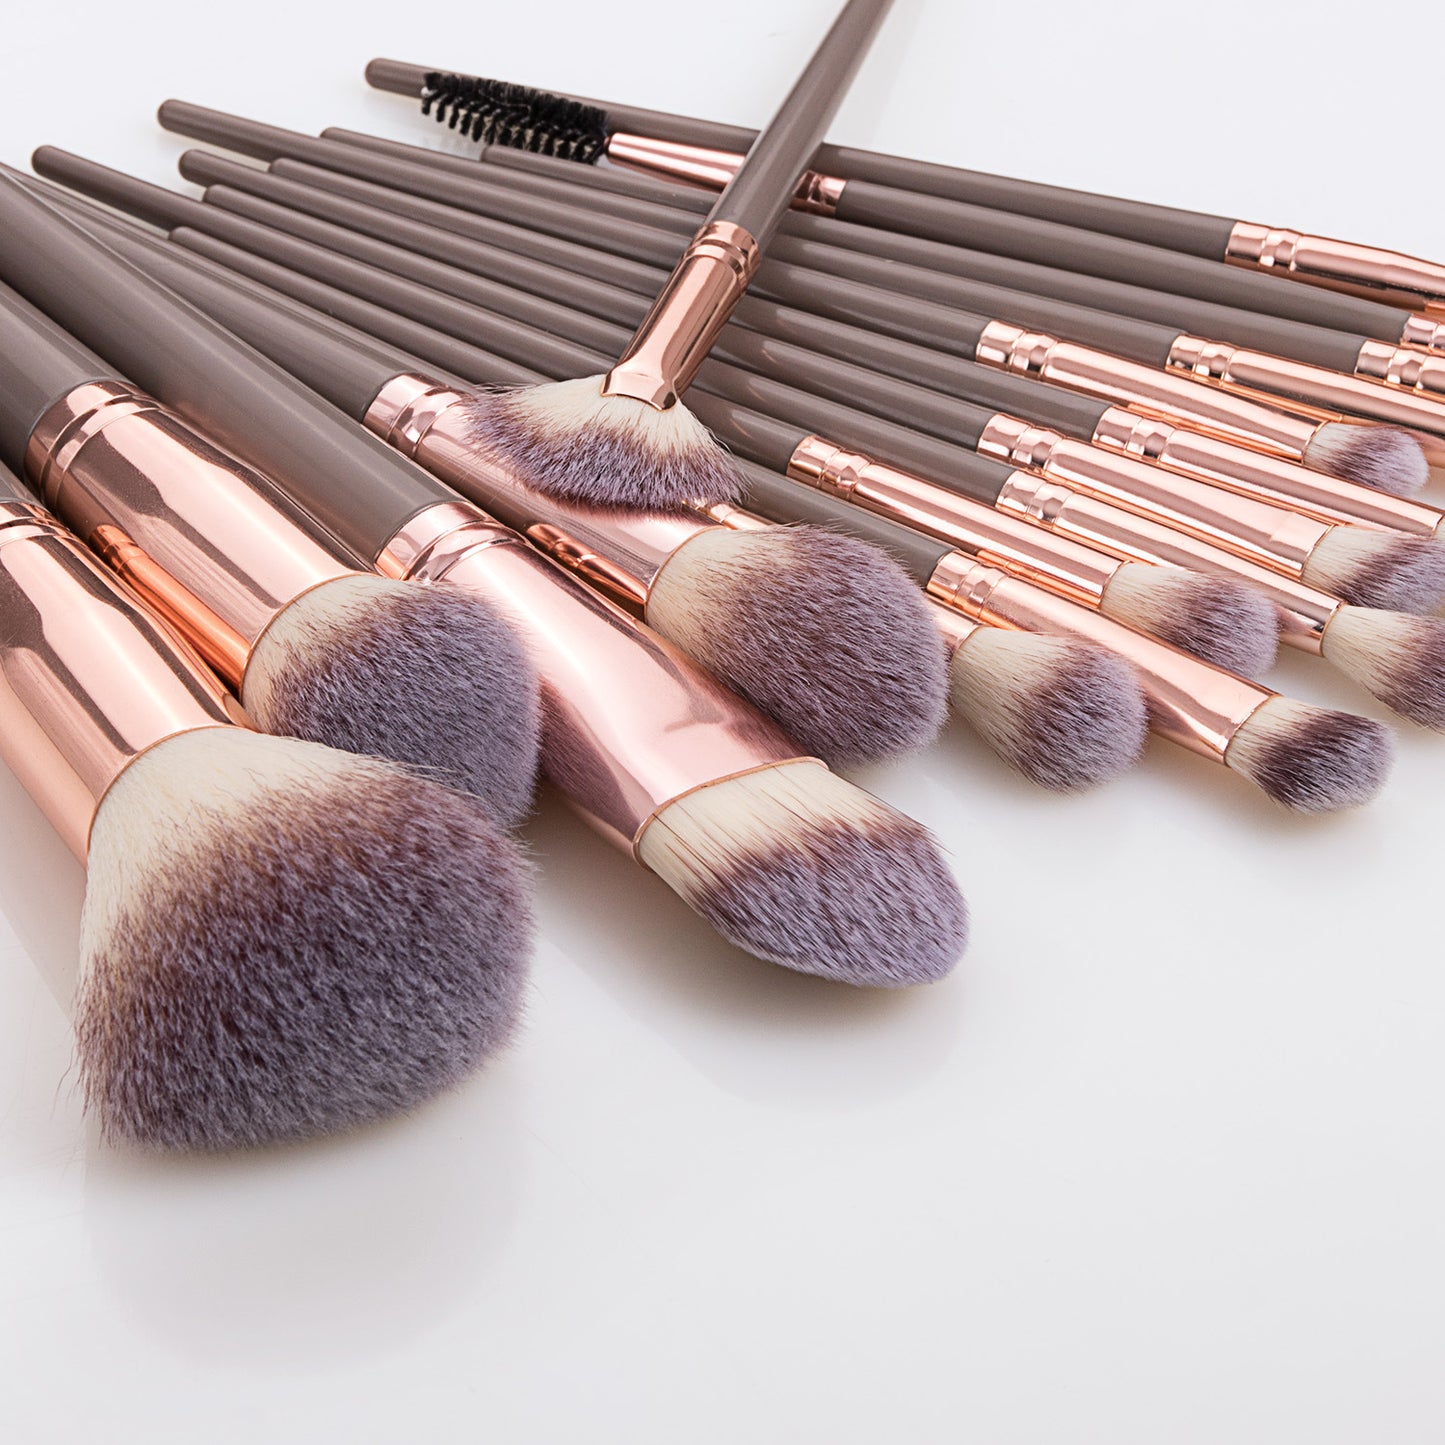 YT Beauty 16 PCS makeup brush set Champagne makeup foundation brush